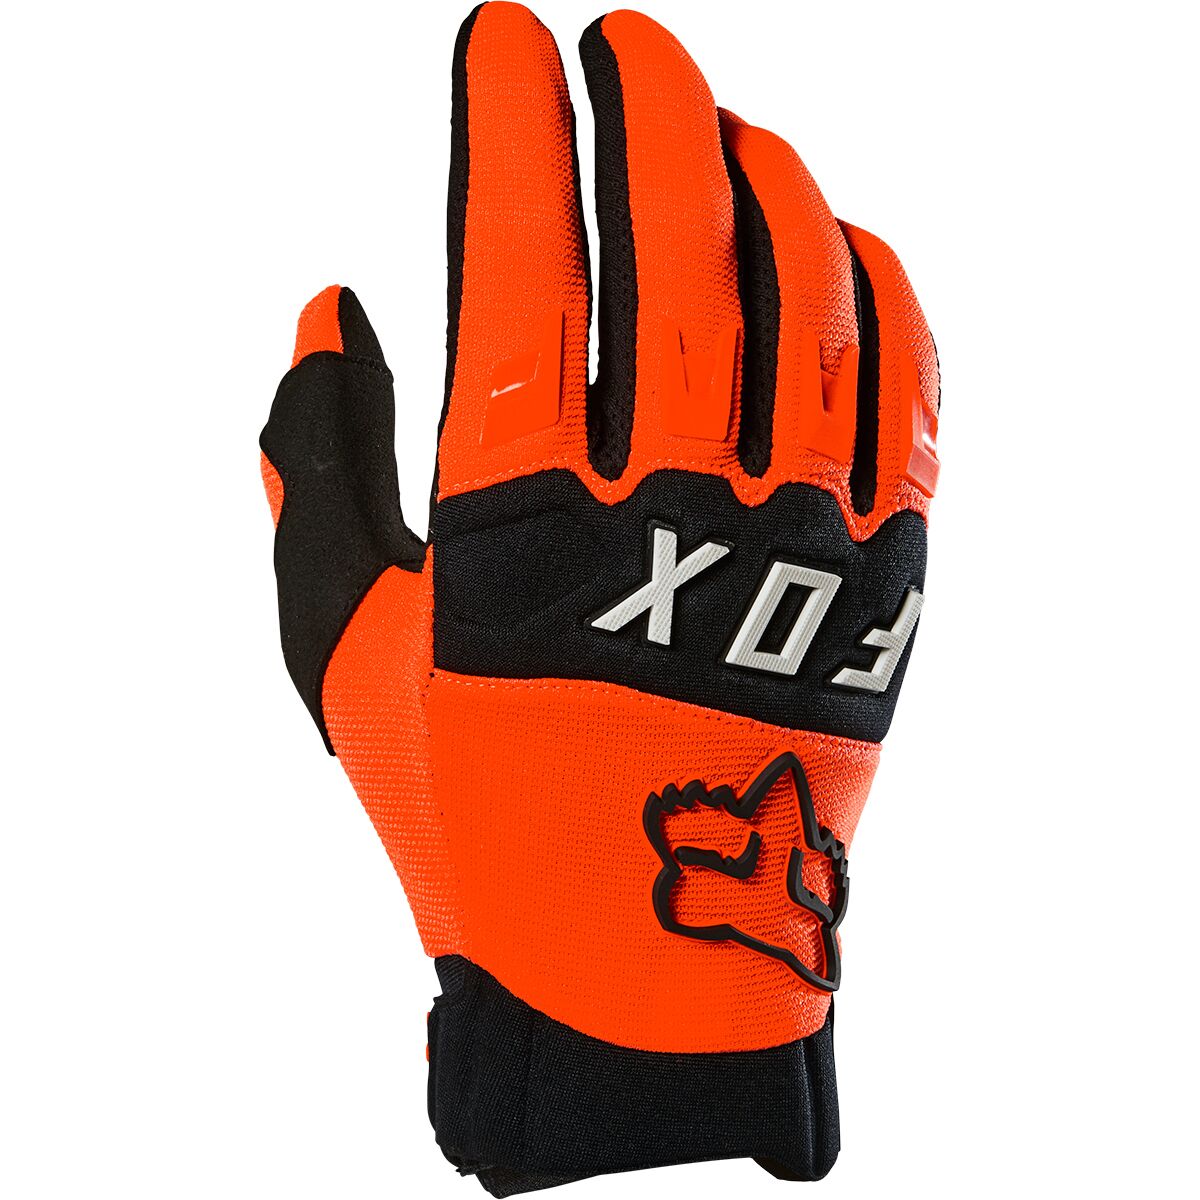 2014 Fox Head Men’s Dirtpaw Race Glove Black Medium